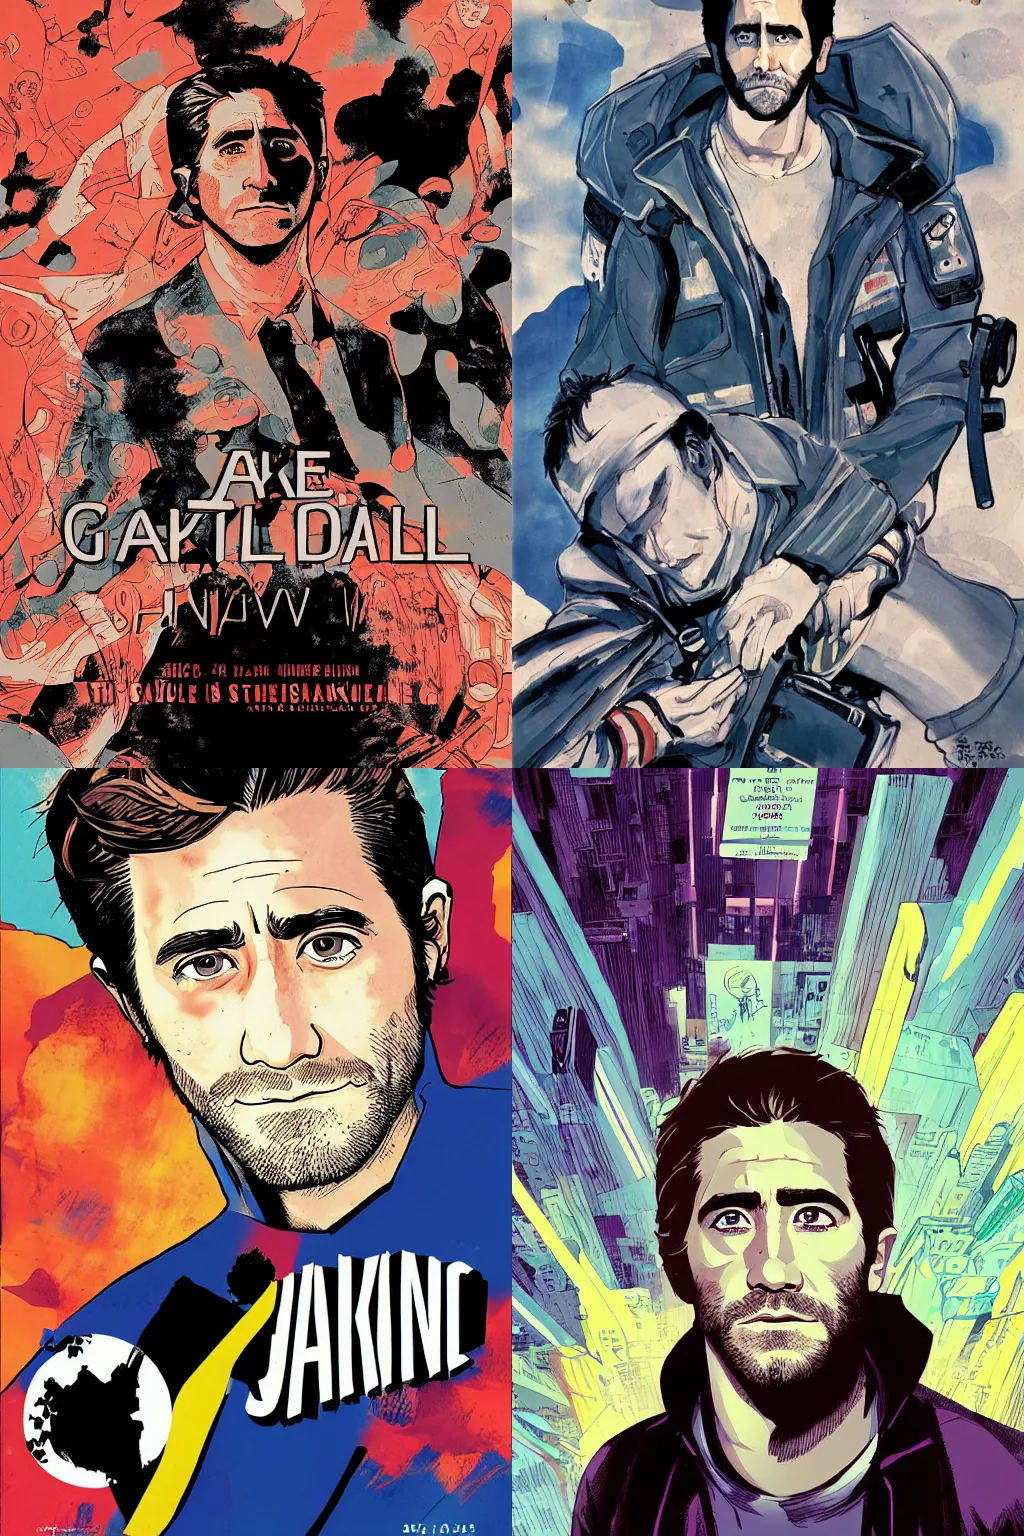 Prompt: jake gyllenhaal graphic novel cover art, yoji shinakawa, studio gainax